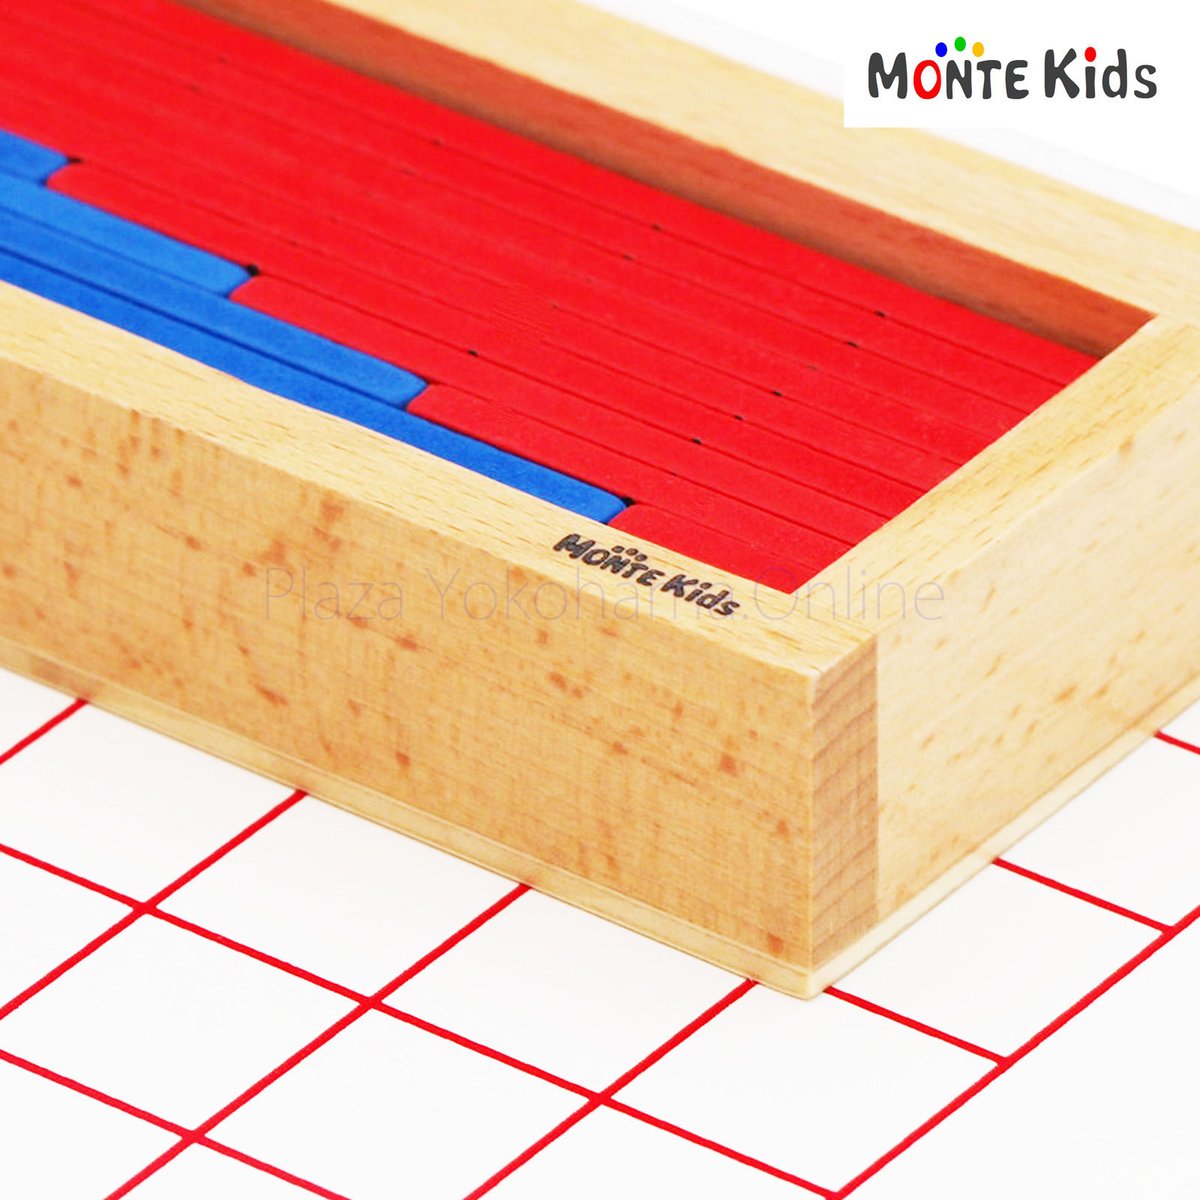 MONTE Kids】MK-058 足し算・引き算板セット | モンテッソーリ教具や